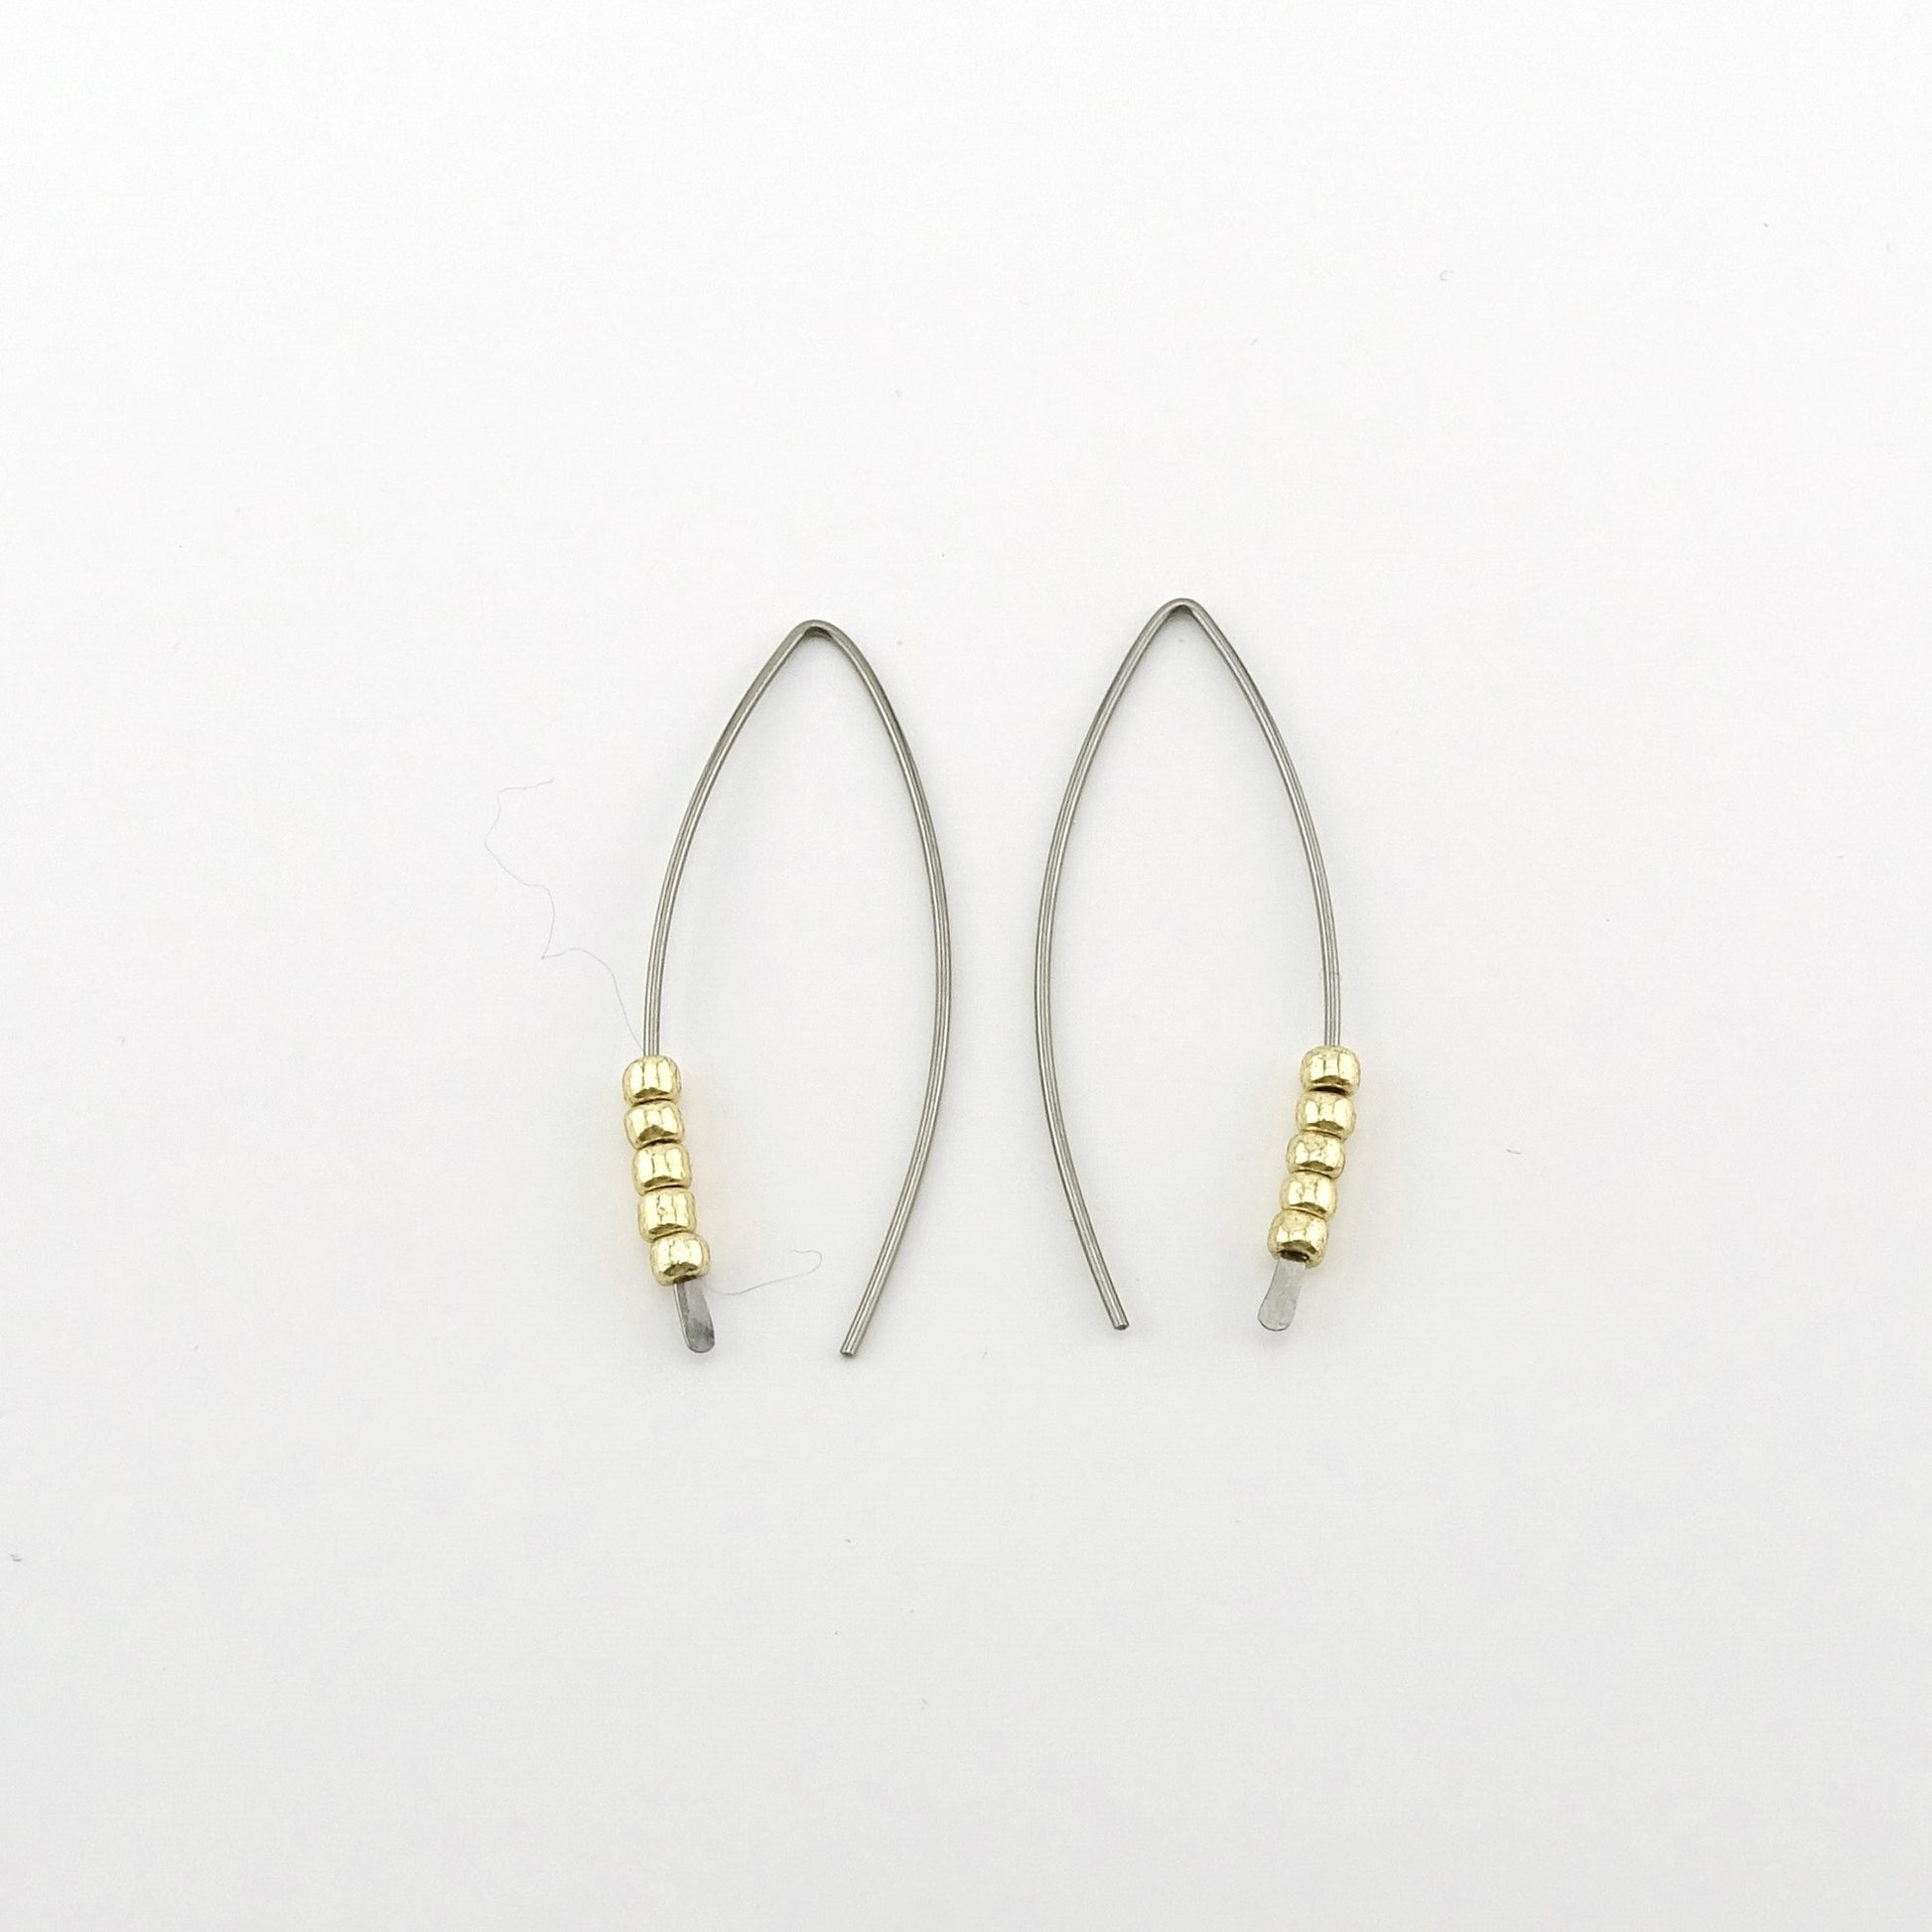 Gold Beaded Niobium Wishbone Threader Earrings, Nickel Free Tiny Gold Beads Threaders, Hypoallergenic Sliders for Sensitive Ears